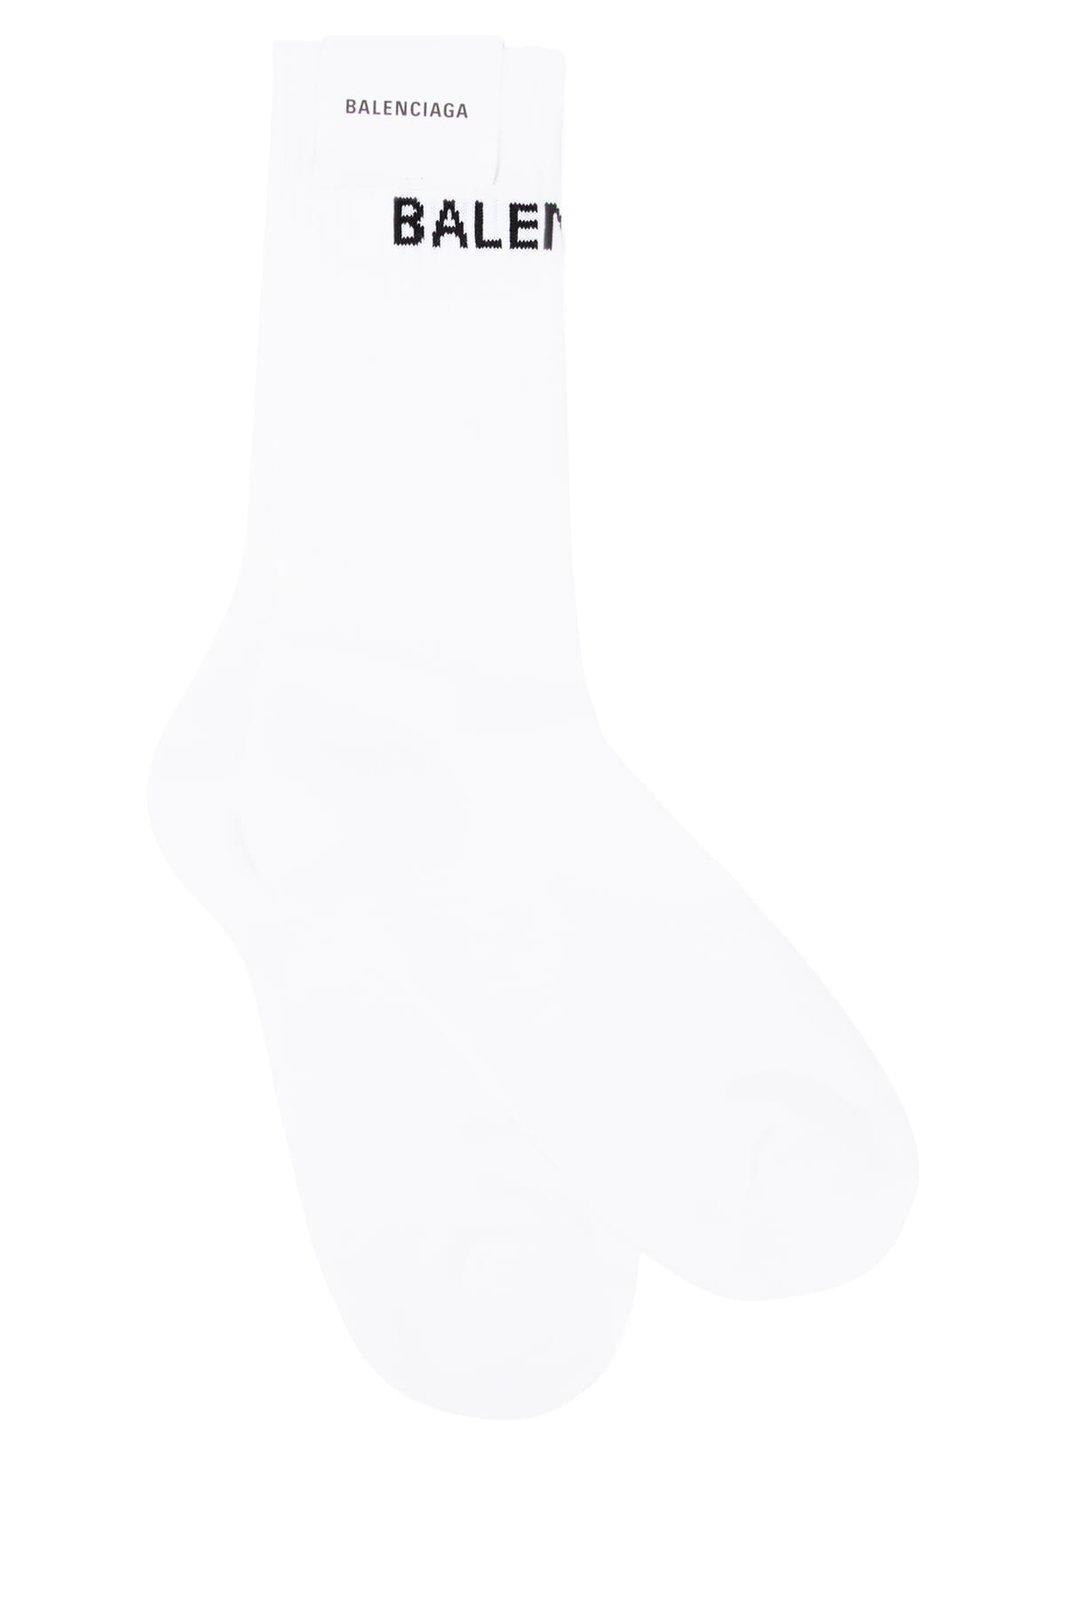 Balenciaga Logo Intarsia Socks